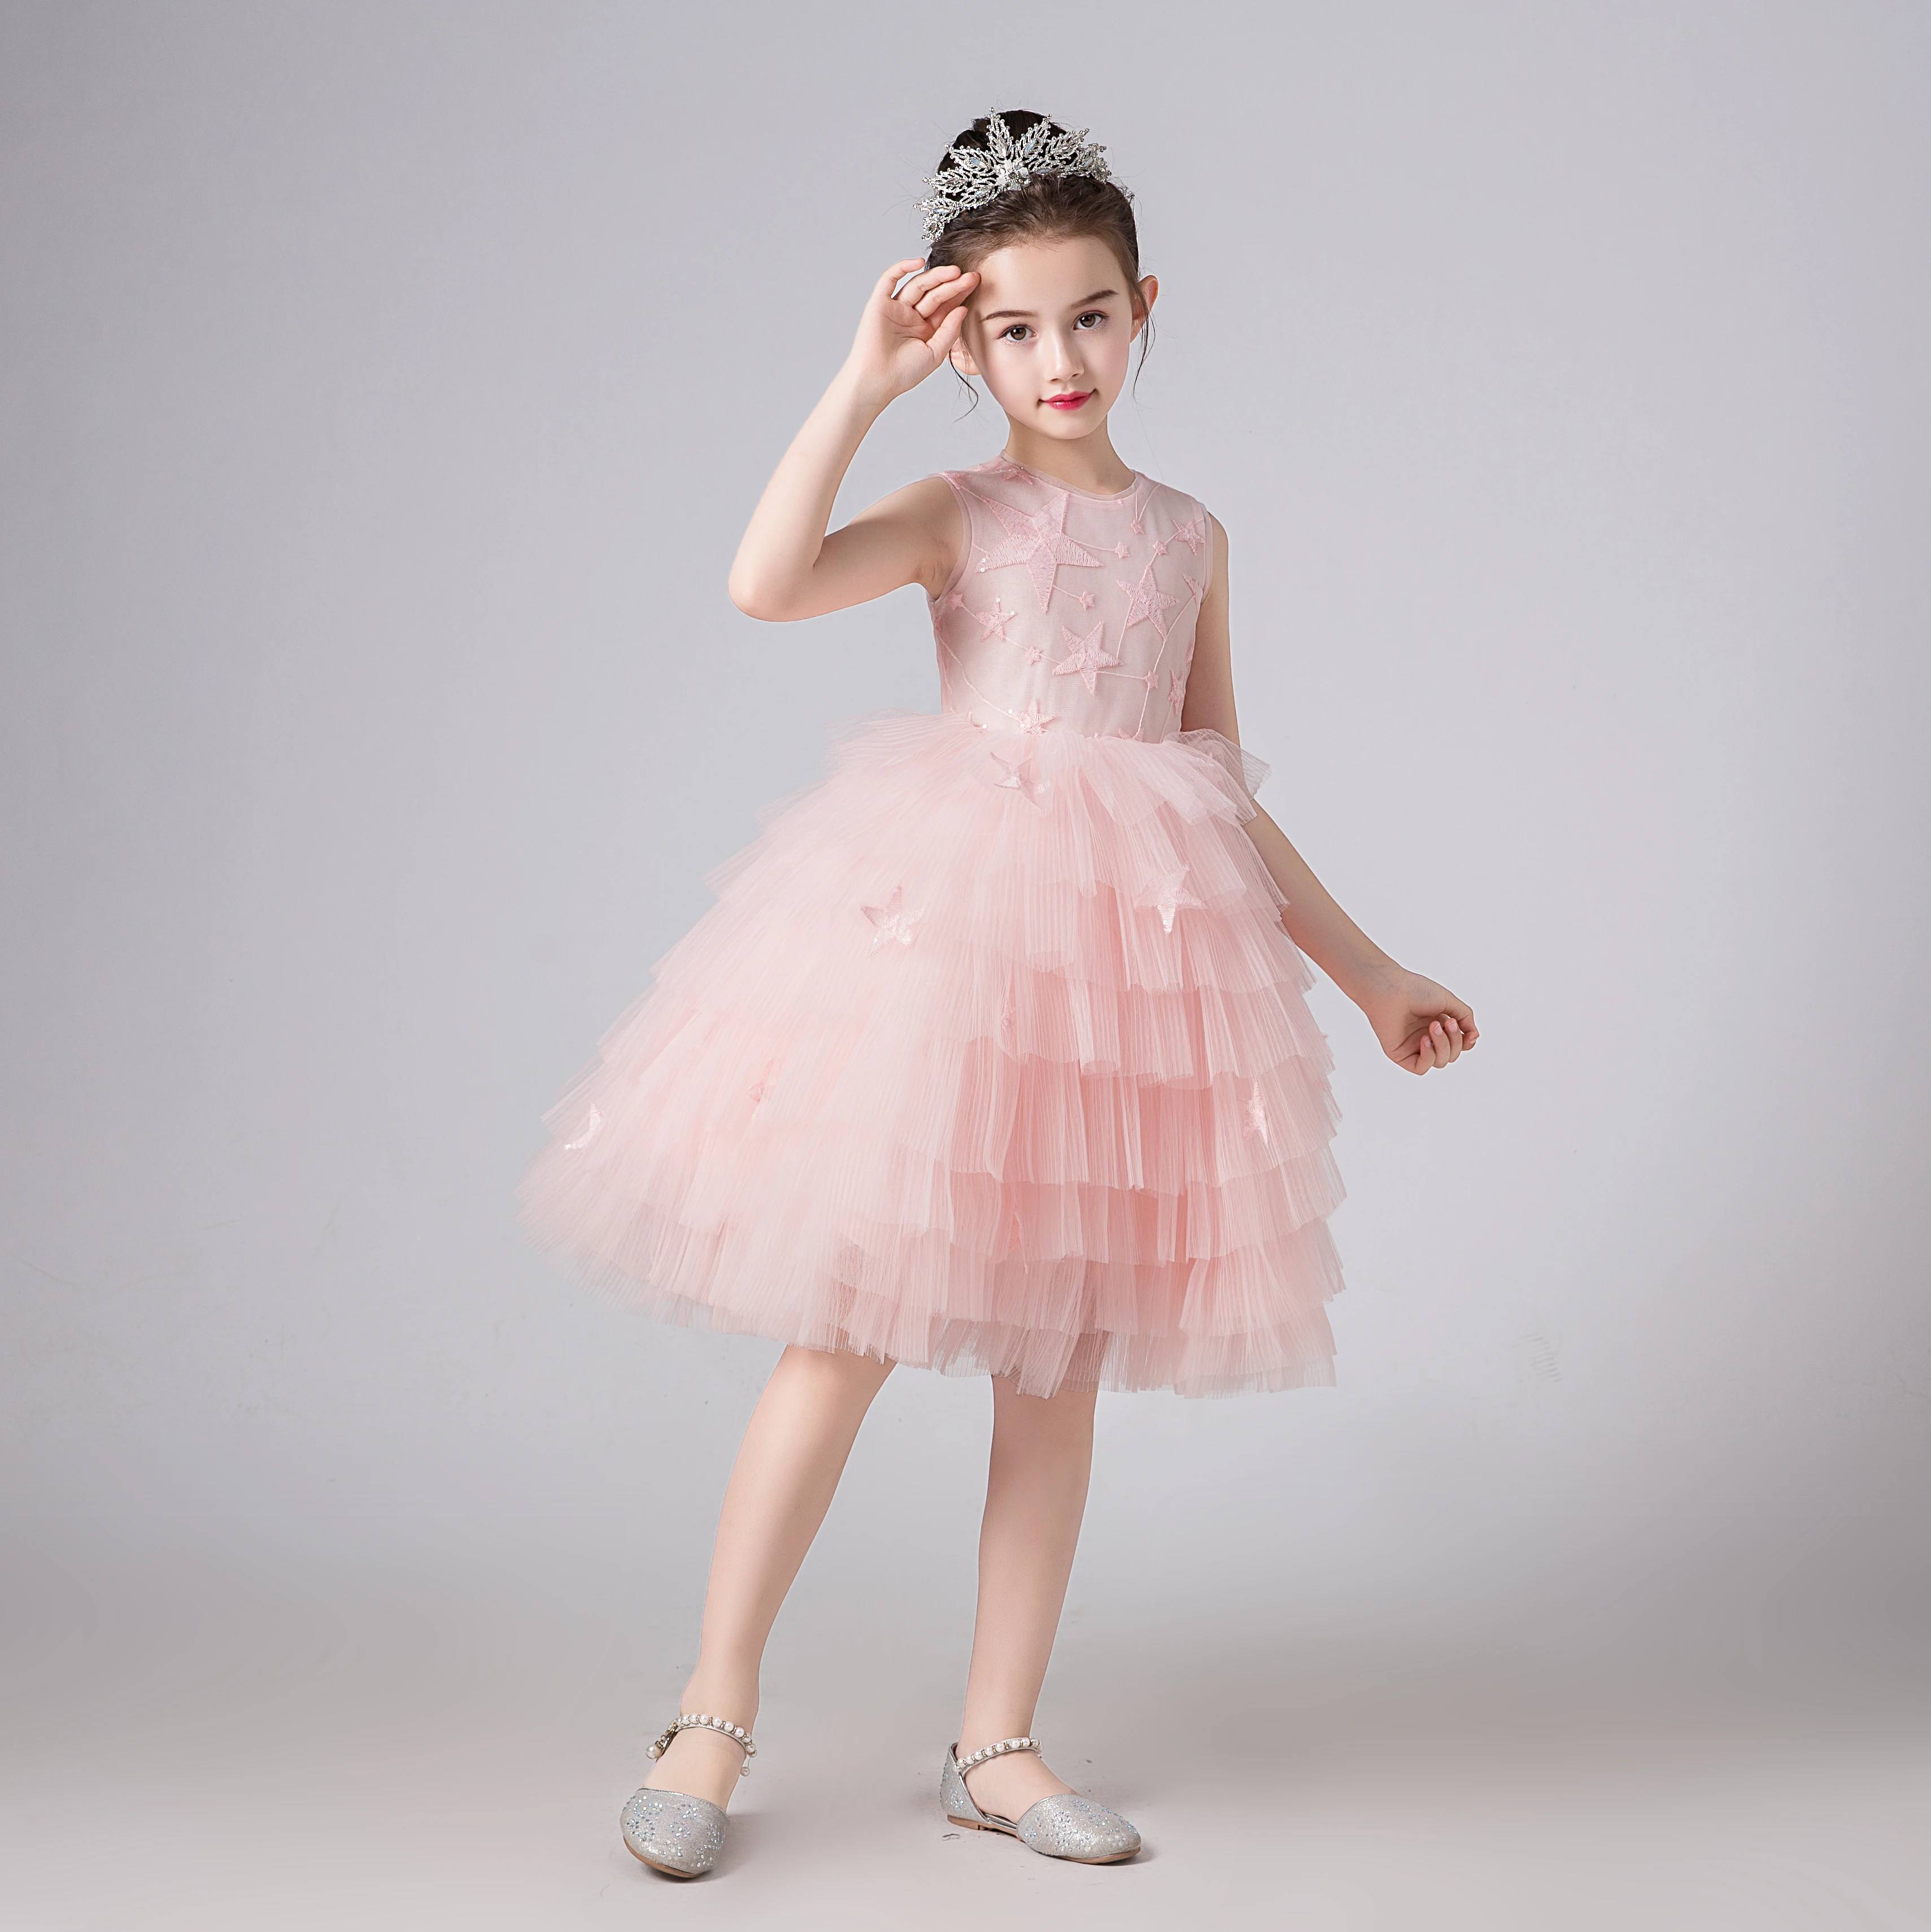 

Kids Flower Girl Dress For Wedding Pink Tutu Junior Girls Formal Princess Dresses Pageant Gowns Short Cute Ruffles Tulle